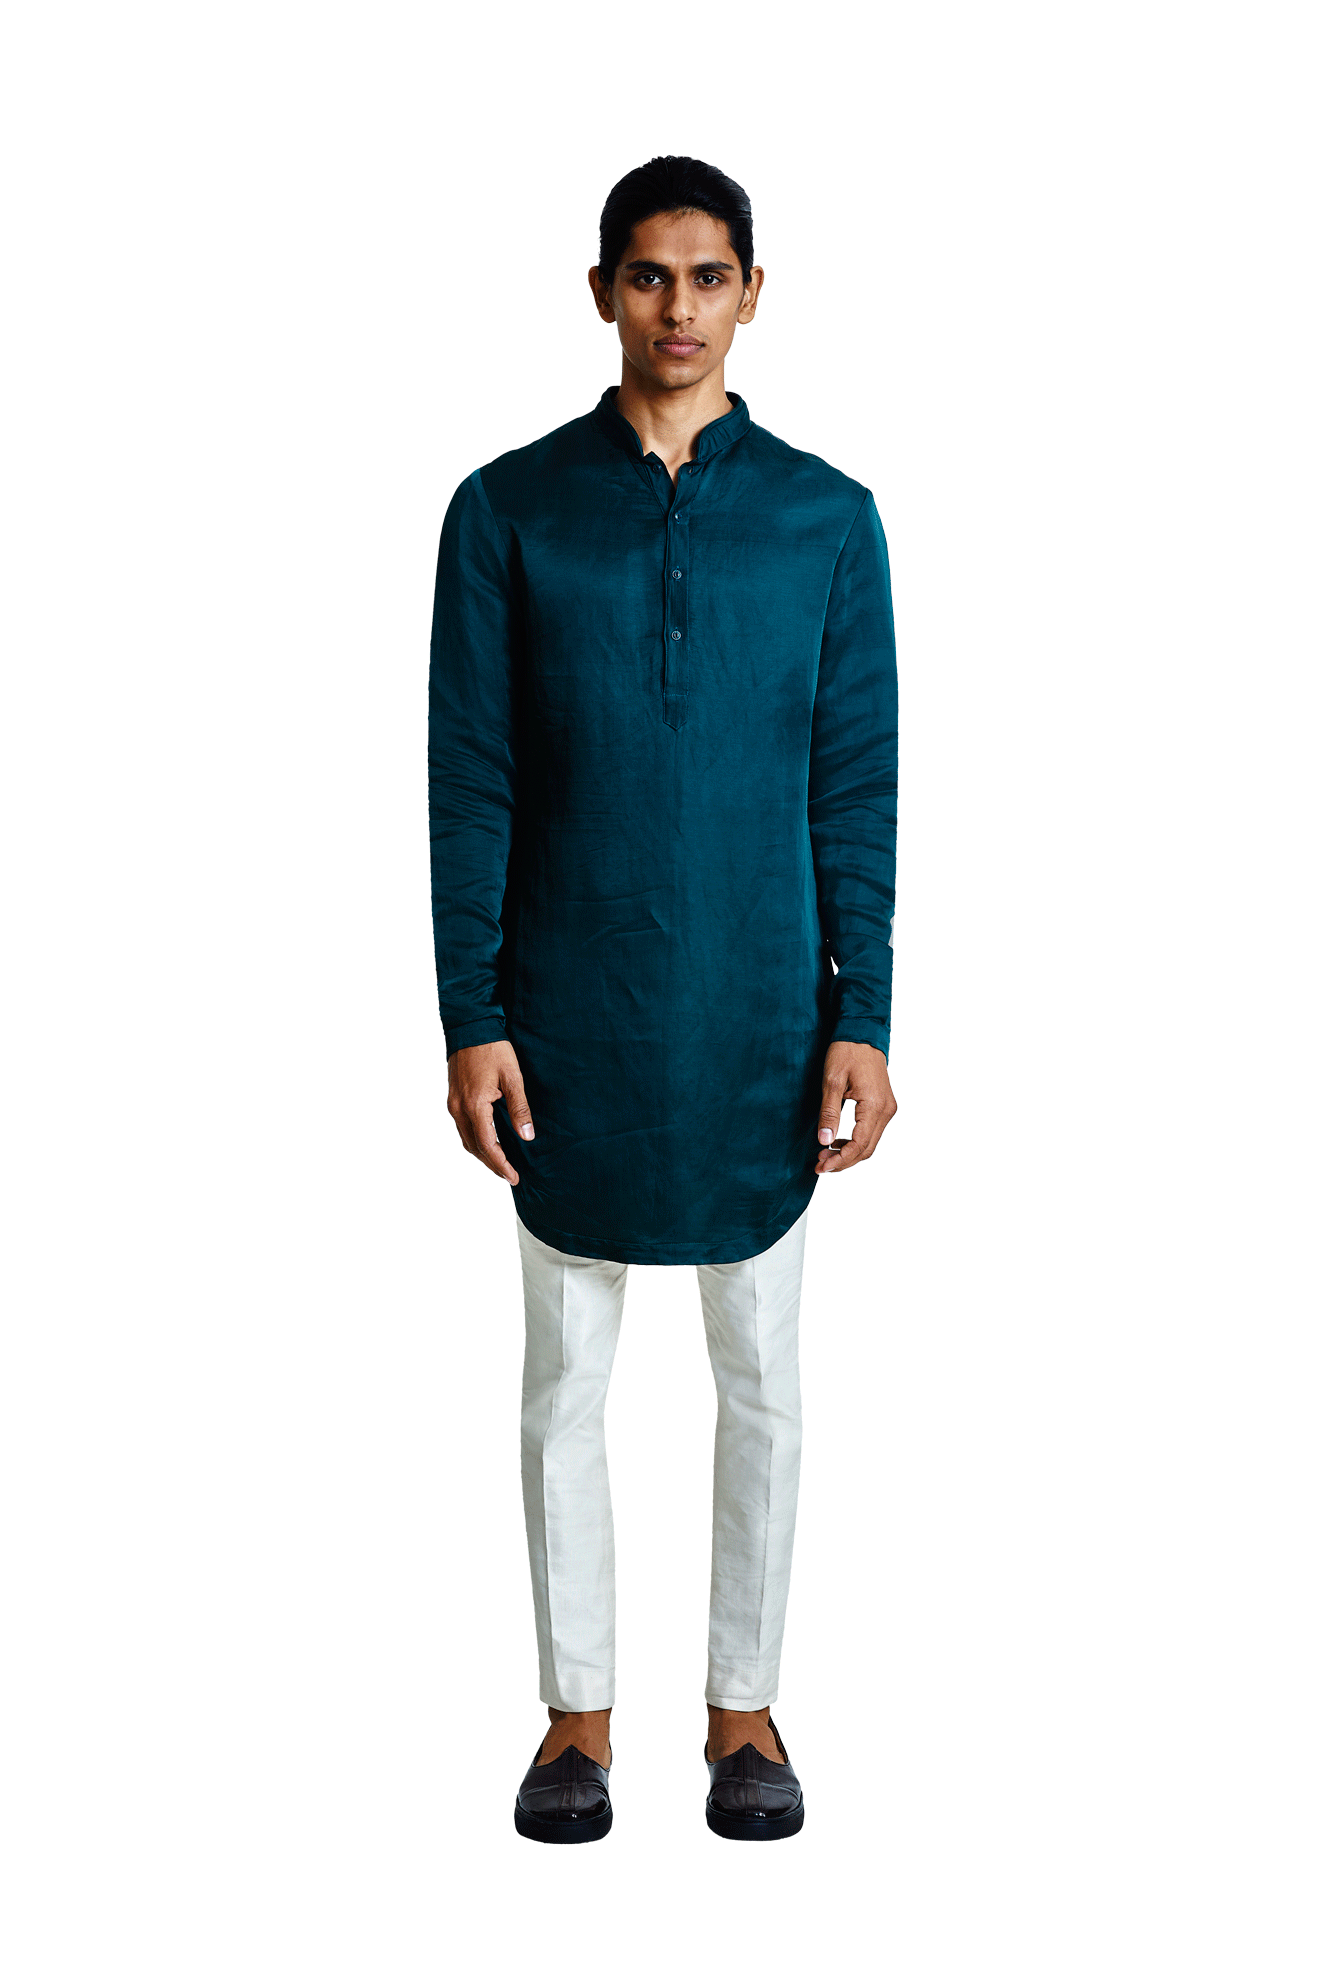 25 Latest Eid Kurta Shalwar Designs for Men to Try This Eid | Man dress  design, Eid outfits, Kurta designs